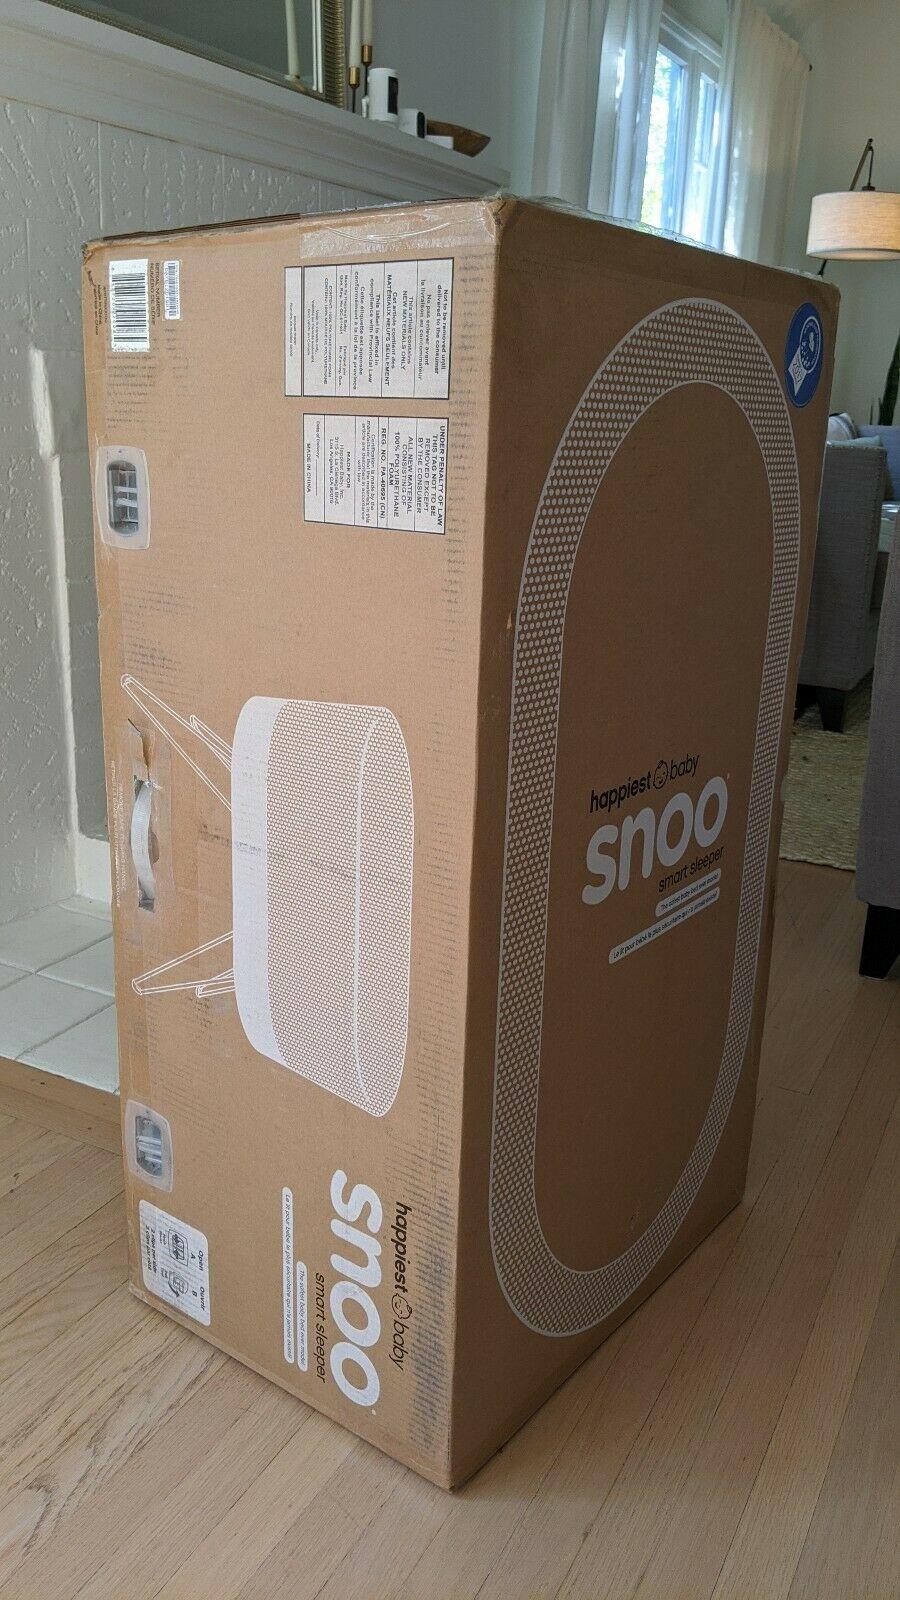 Sealed in original box Snoo Smart sleeper bassinet